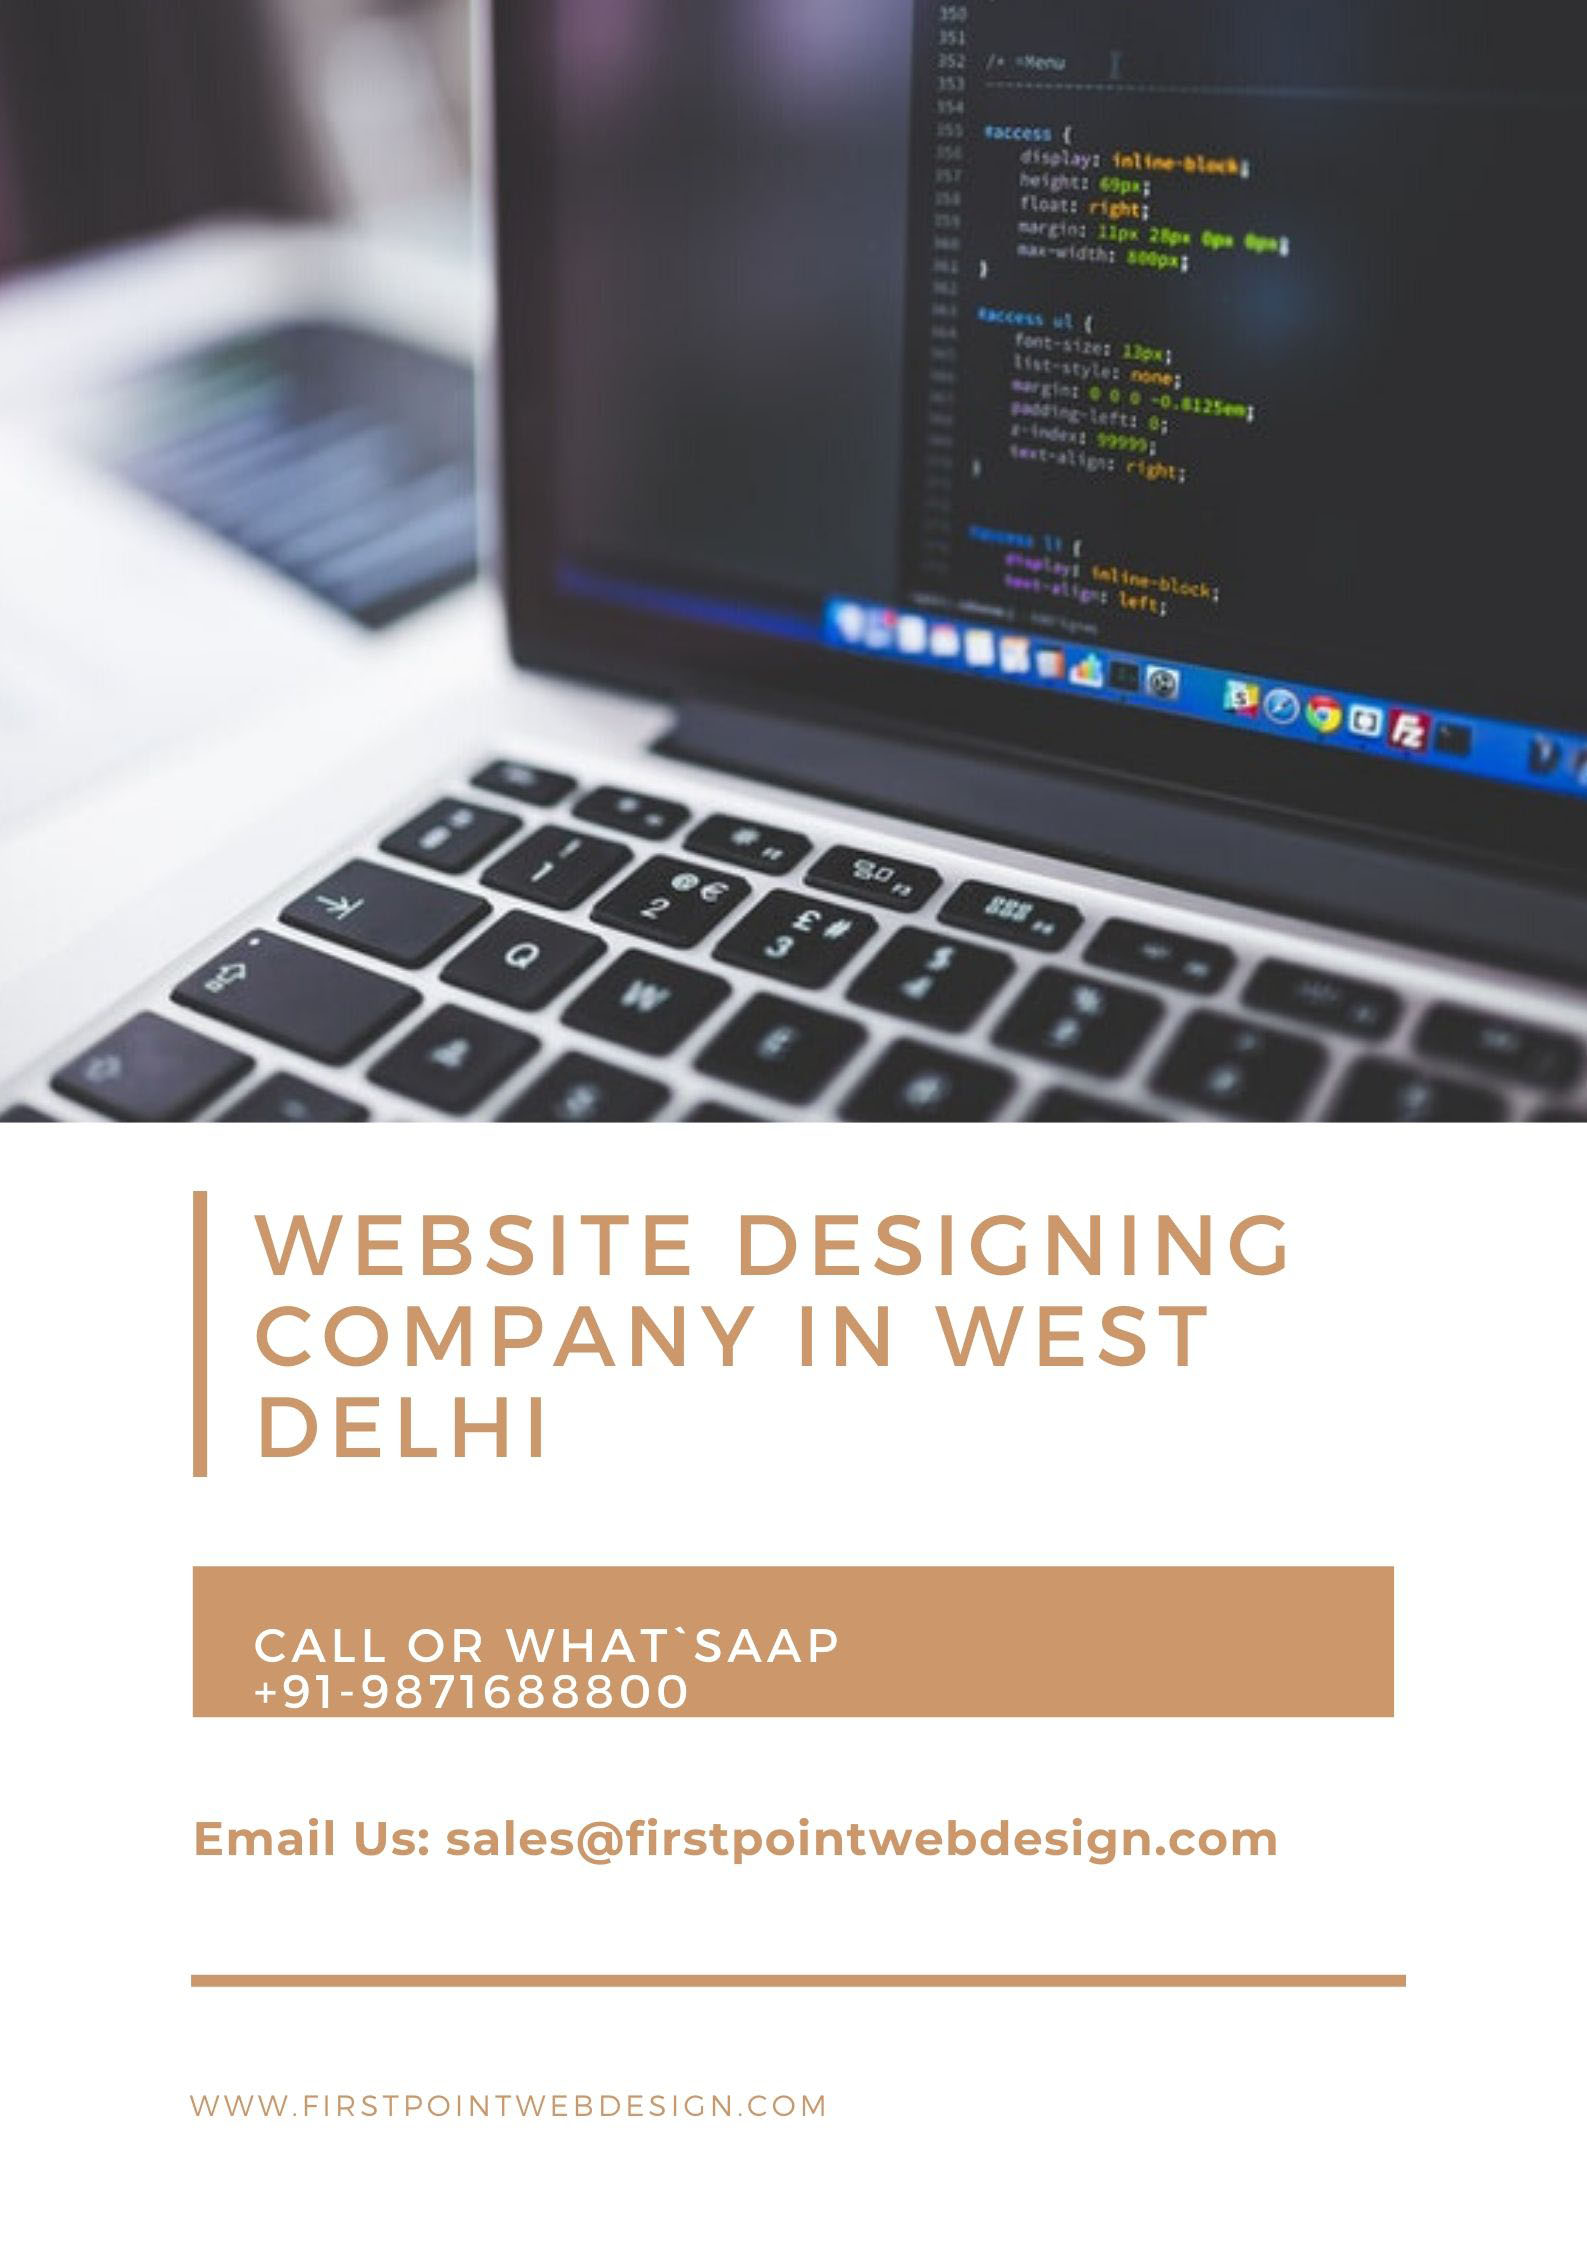 website designing company in West DelhiServicesBusiness OffersWest DelhiKirti Nagar